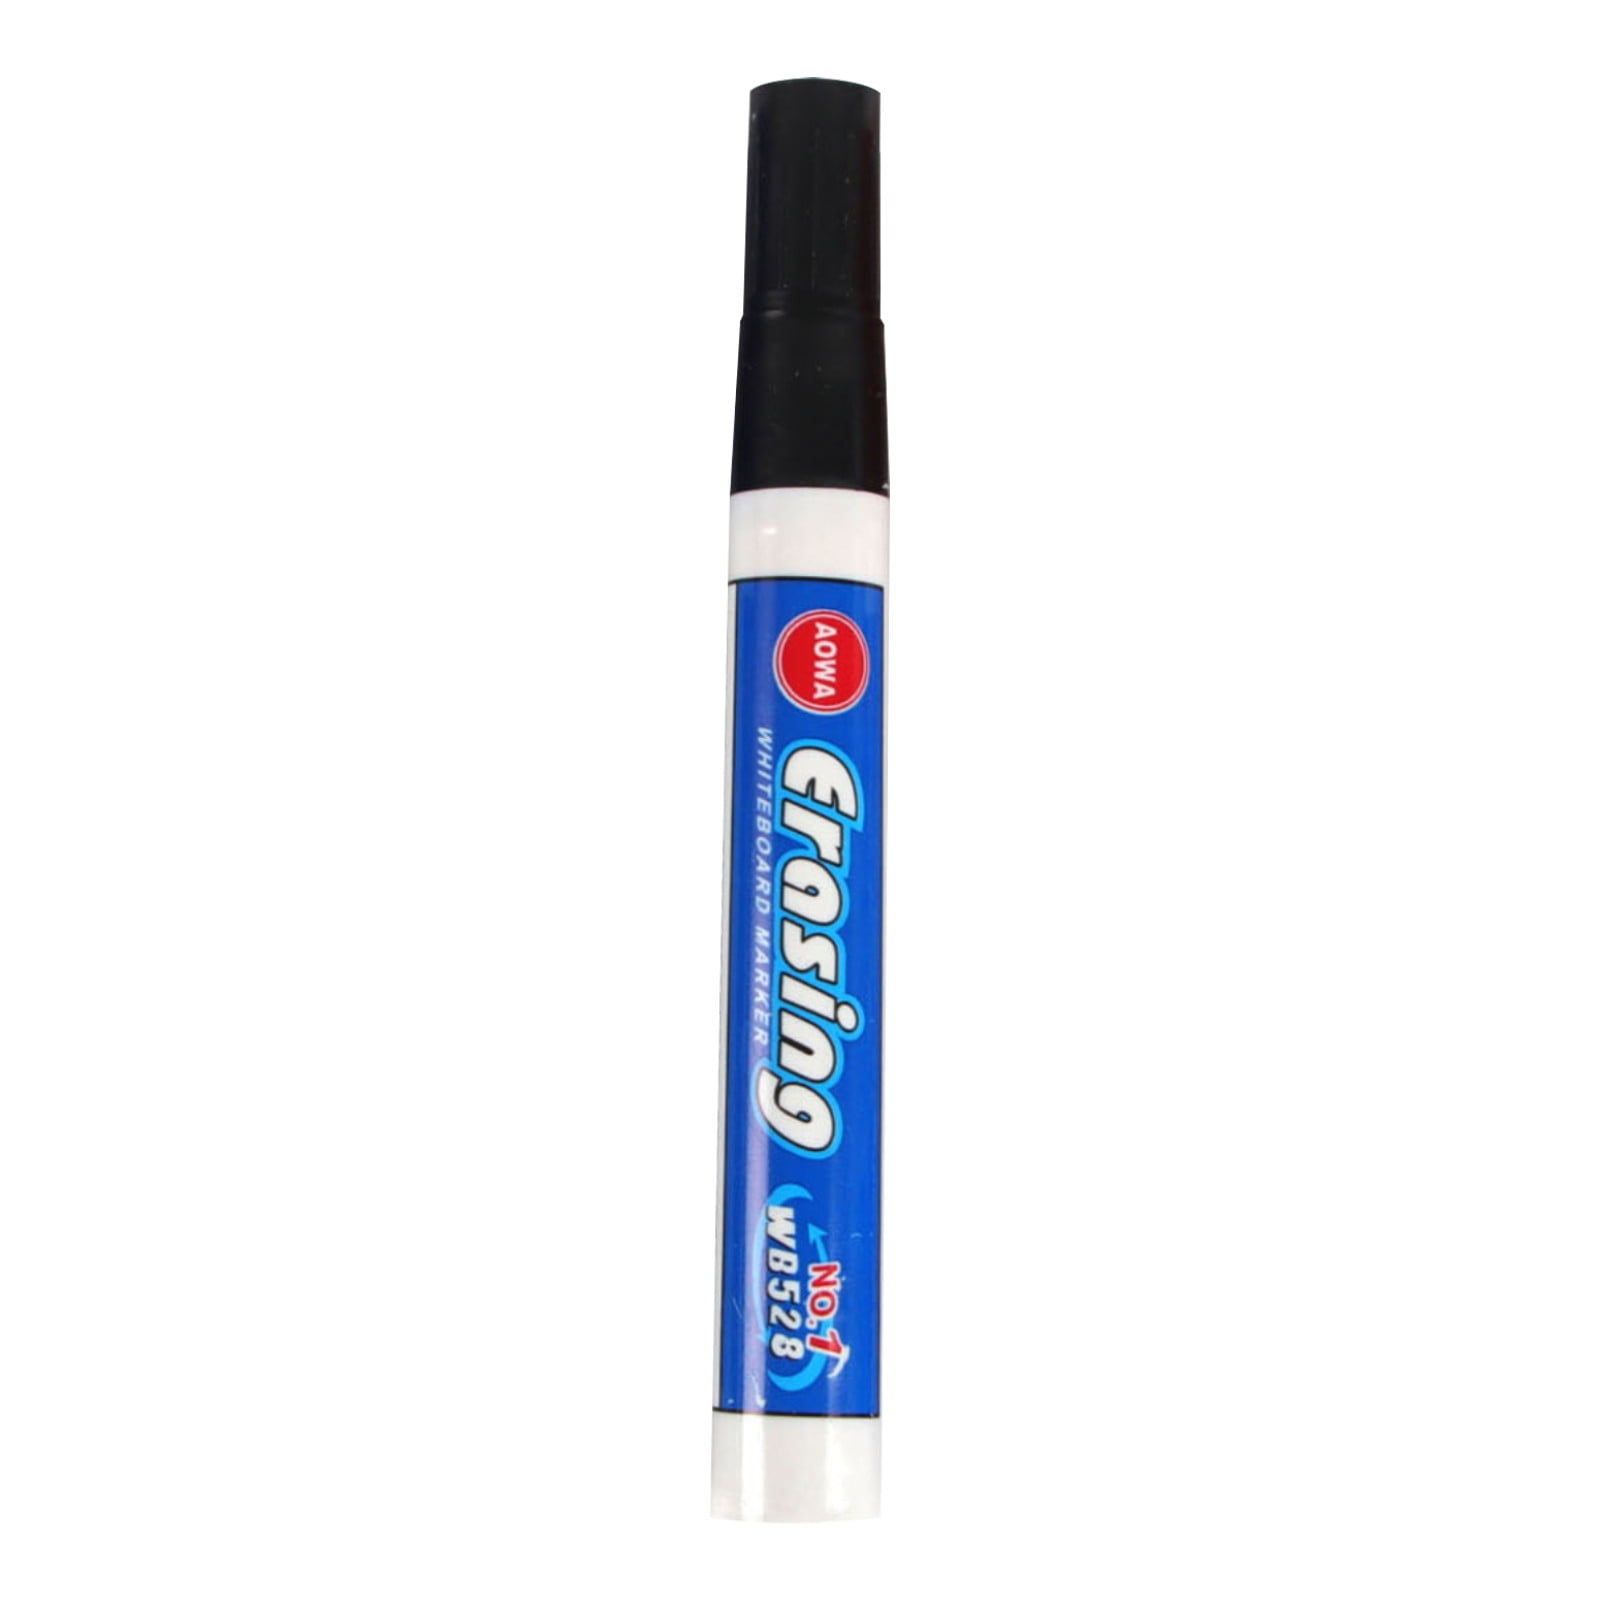 Dengmore Low Odor Water based Whiteboard Pen Erasable Black Red And Blue  Color Blackboard Pen Easy to erasable Marker 10ml Black 